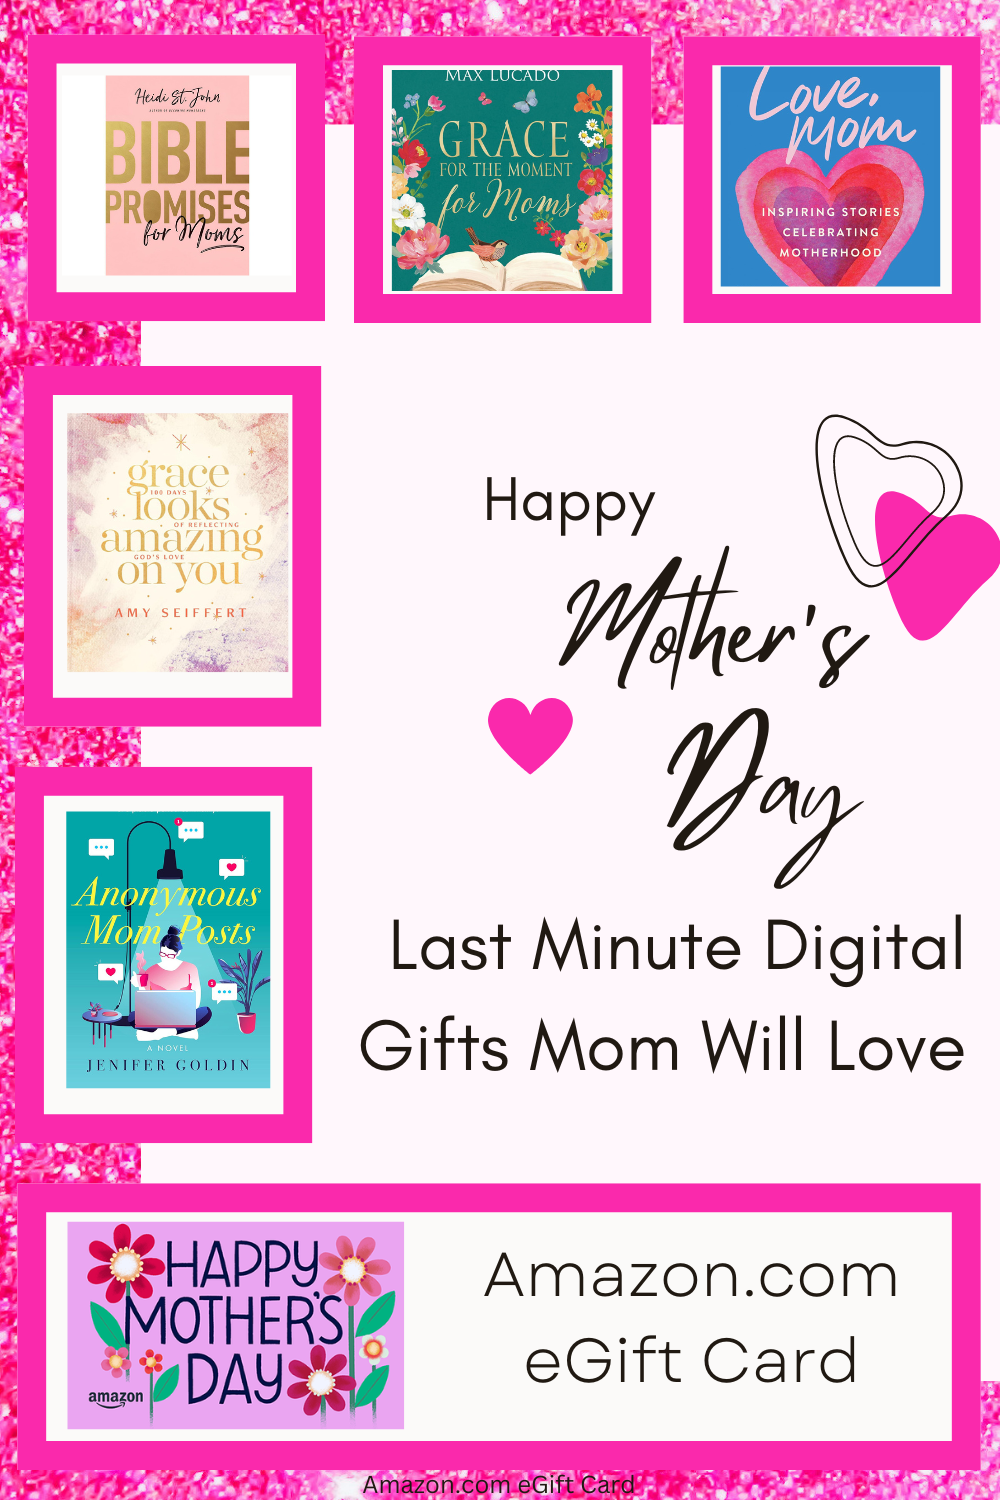 Last Minute Digital Gift Ideas Mom Will Love